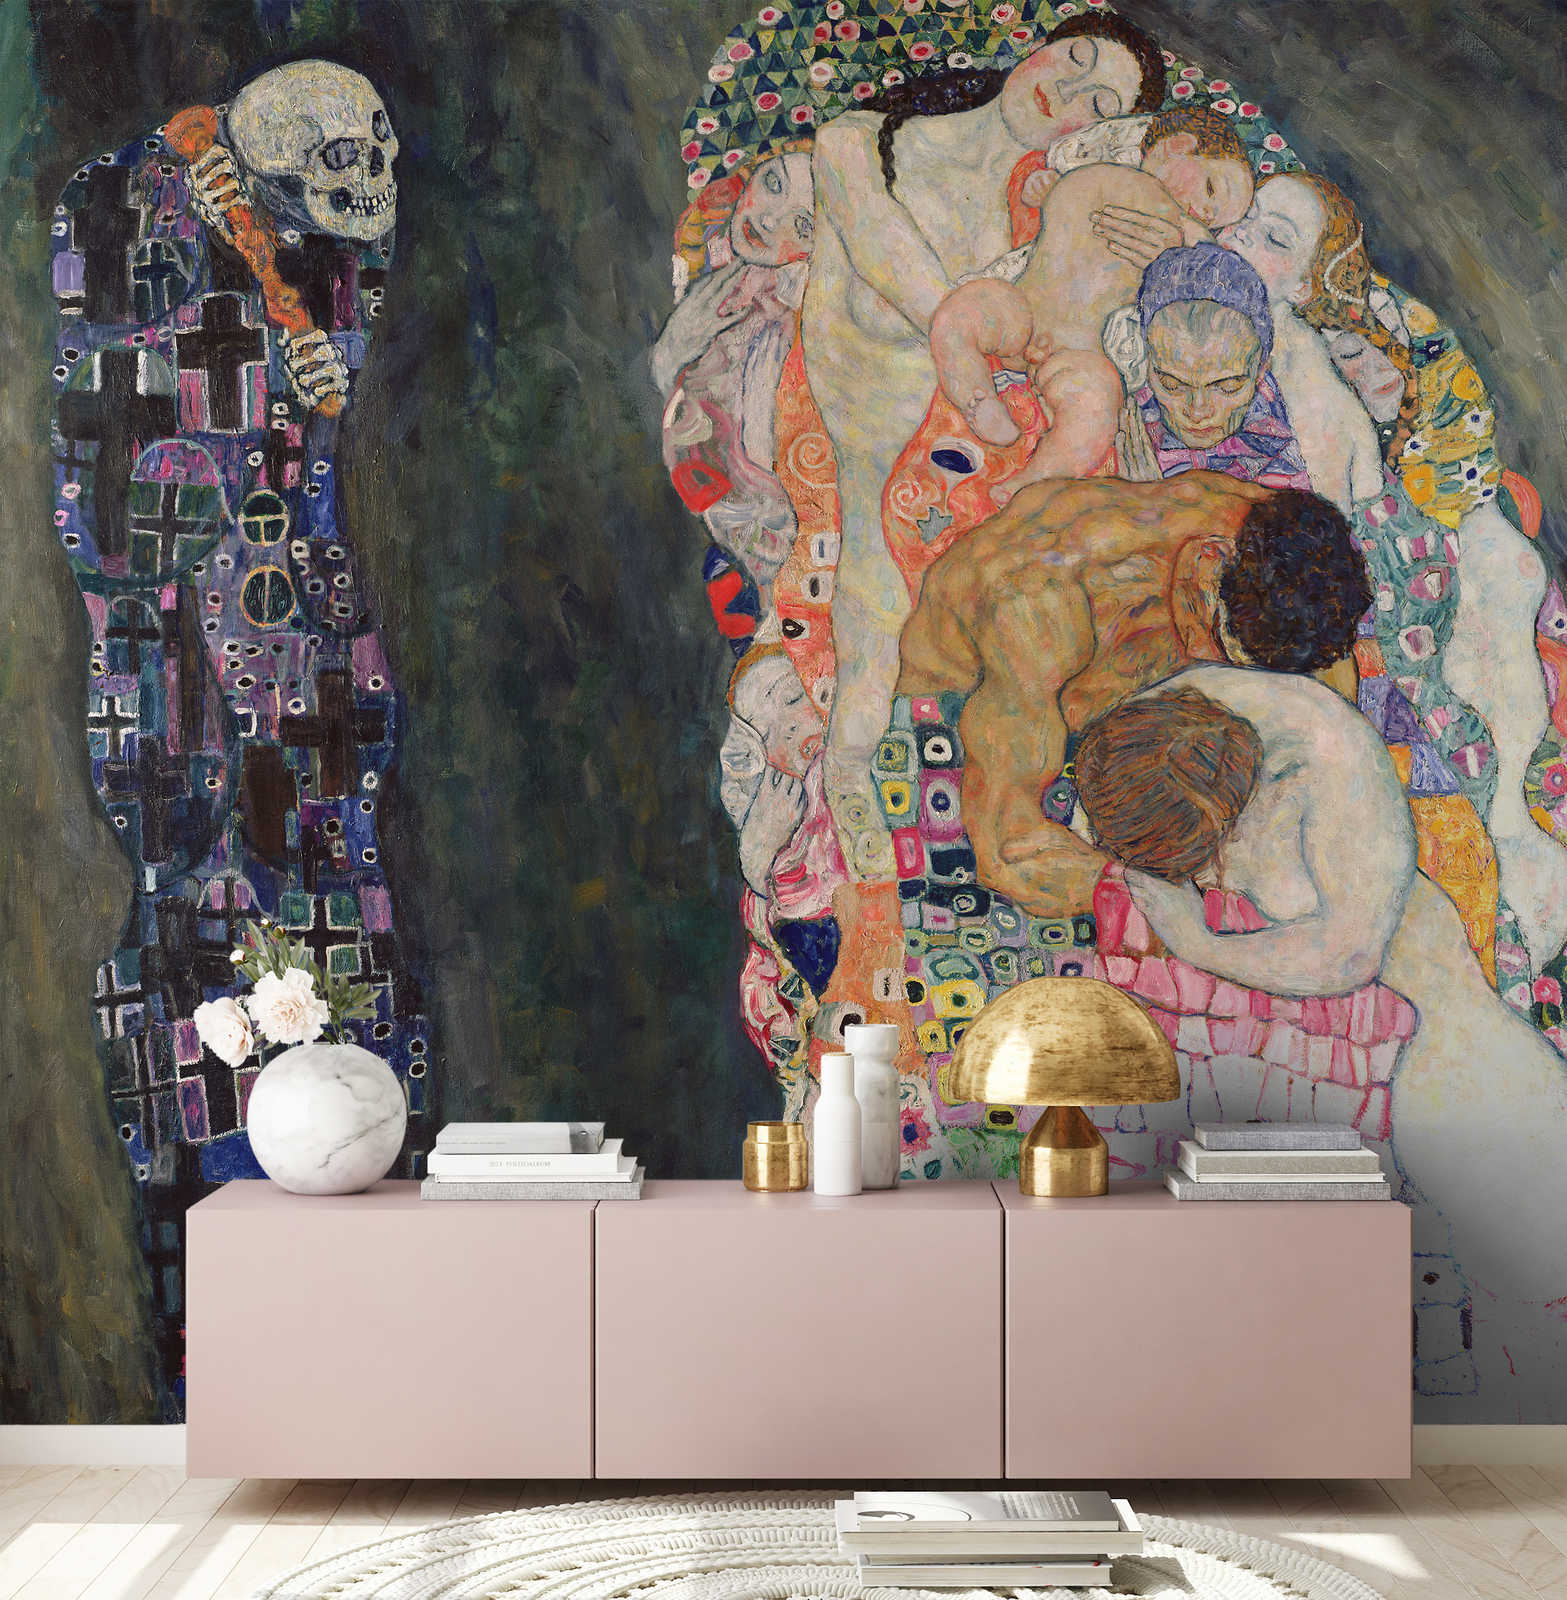             Mural "Hygieia" de Gustav Klimt
        